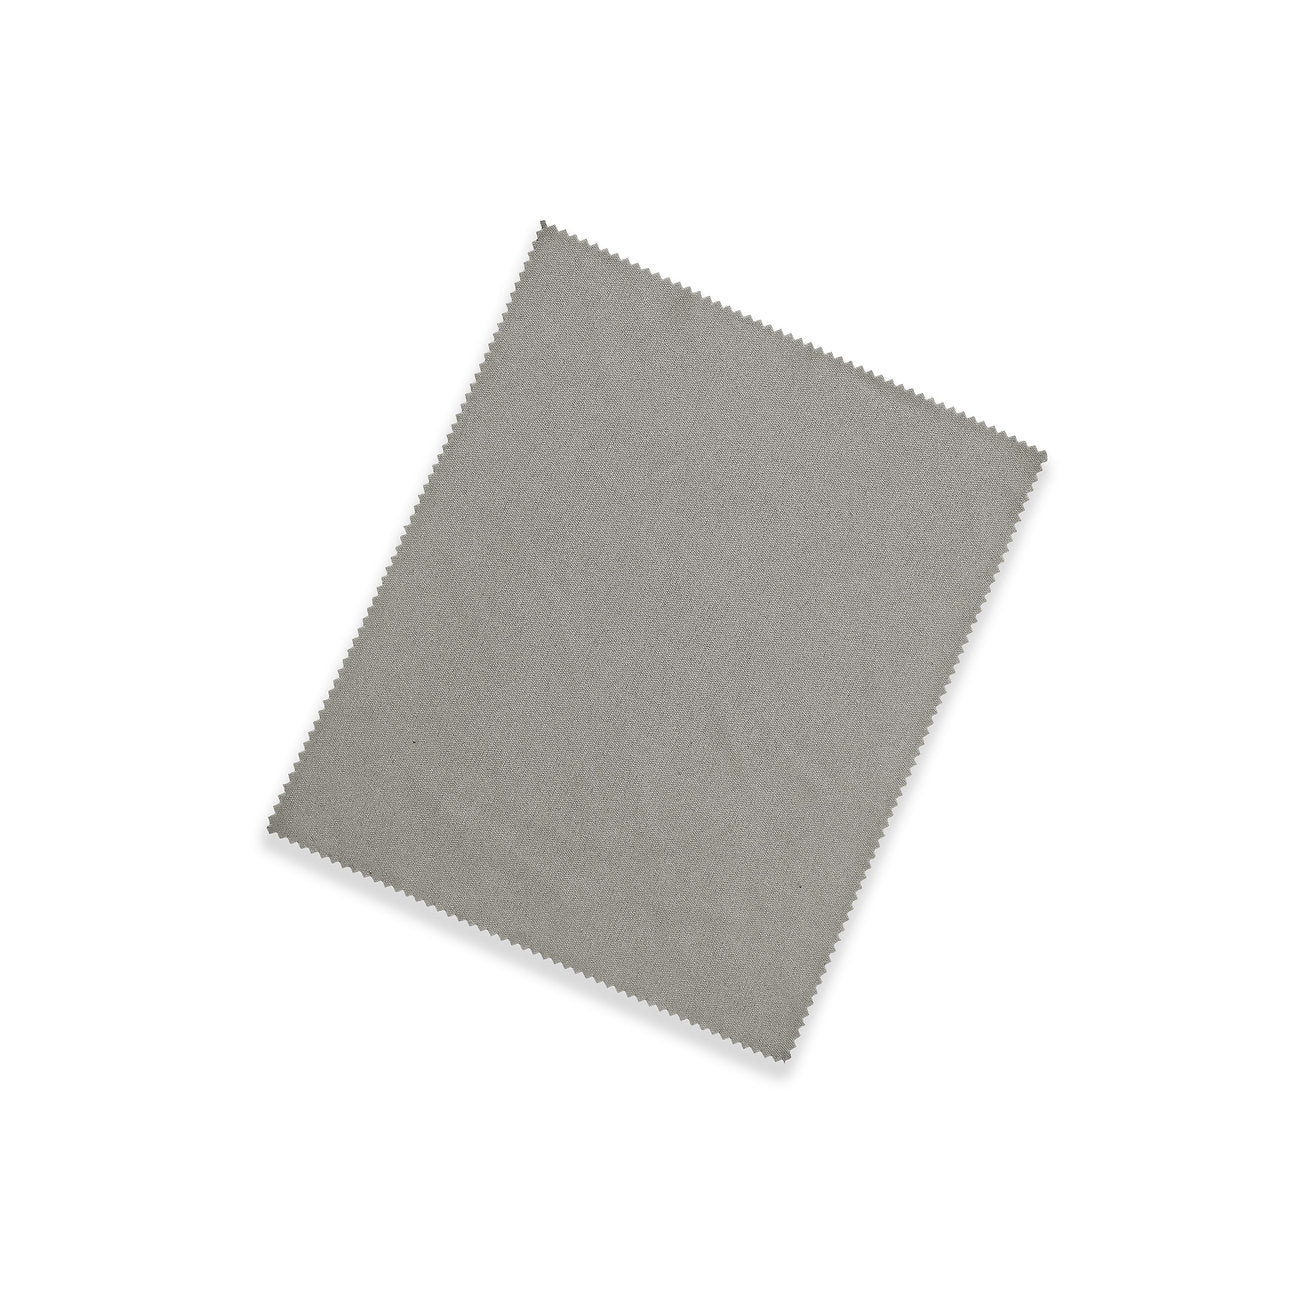 Grey microfiber cloth